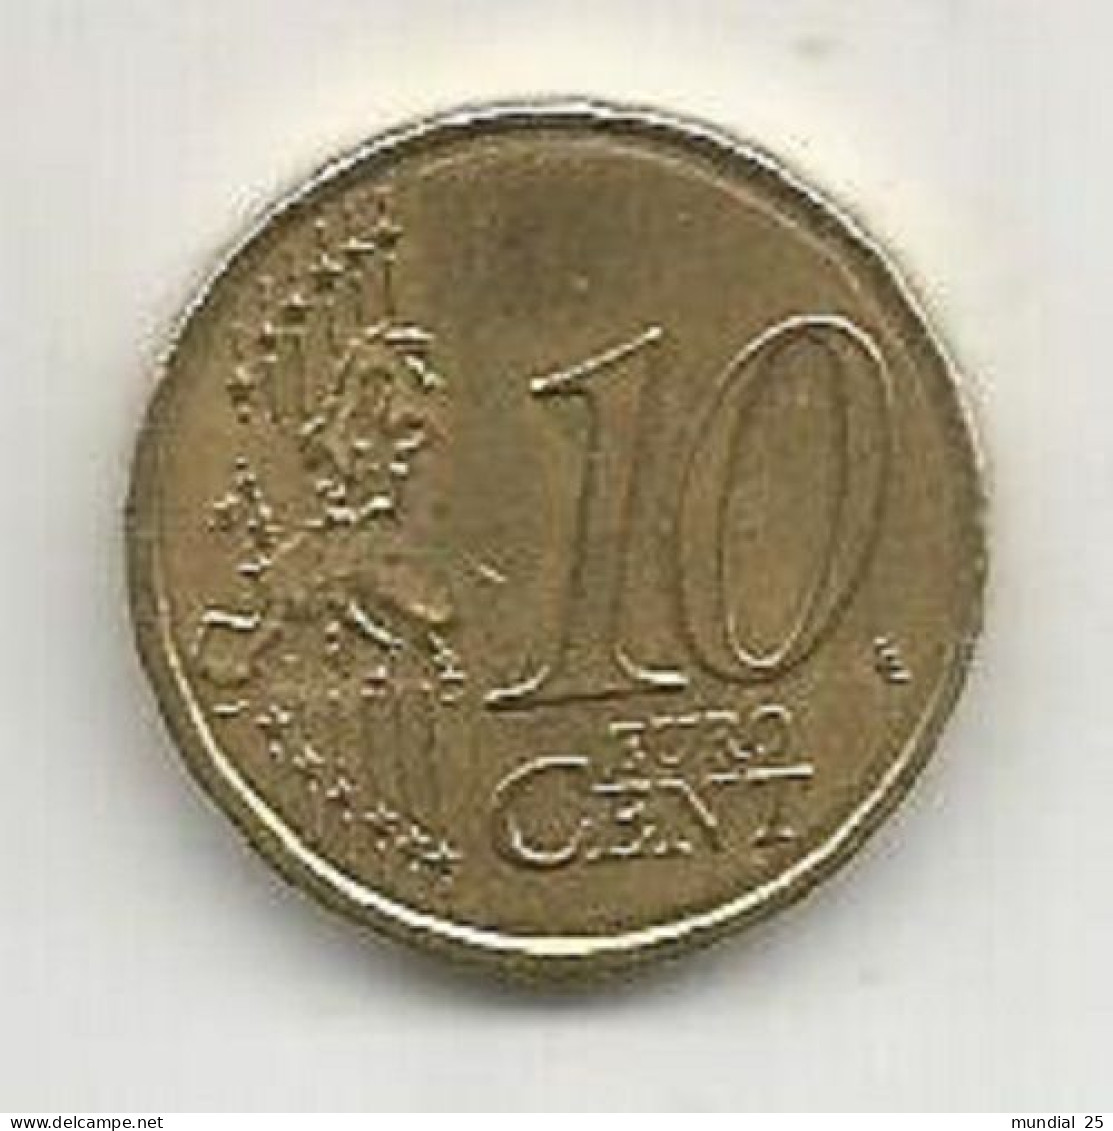 FRANCE 10 EURO CENT 2009 - France